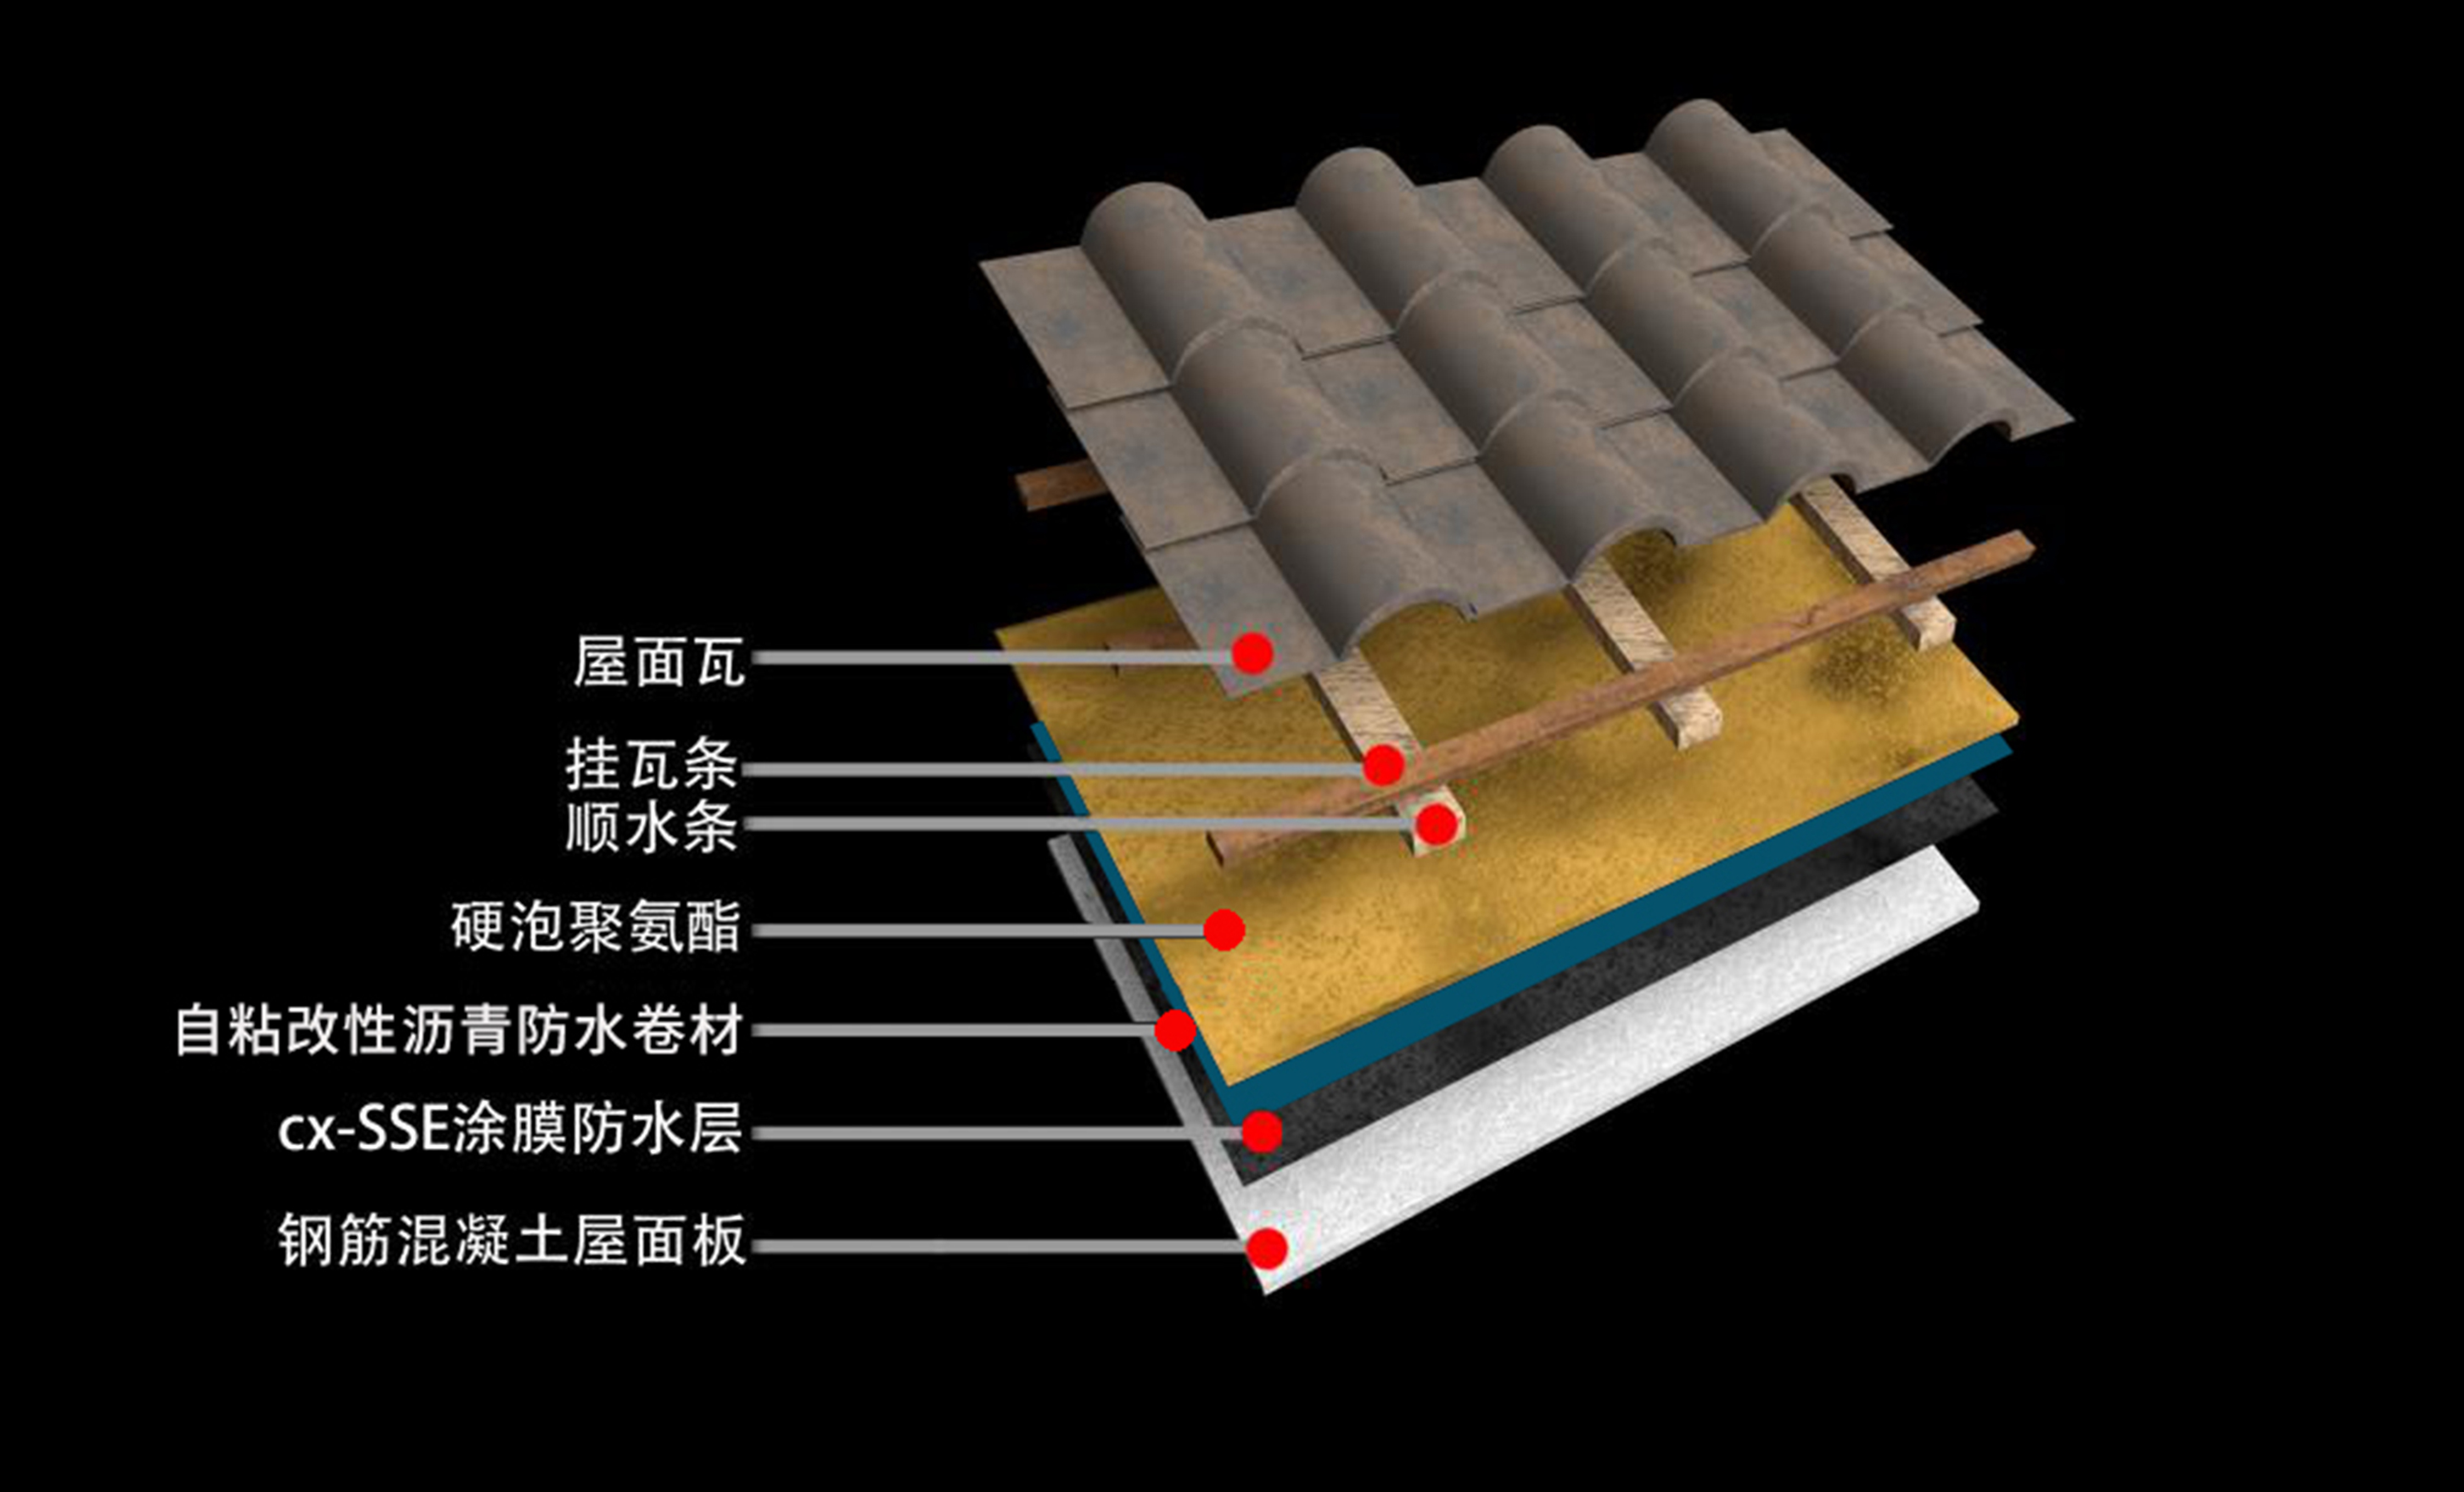 cx- HPR 屋面工程防水保温一体化系统